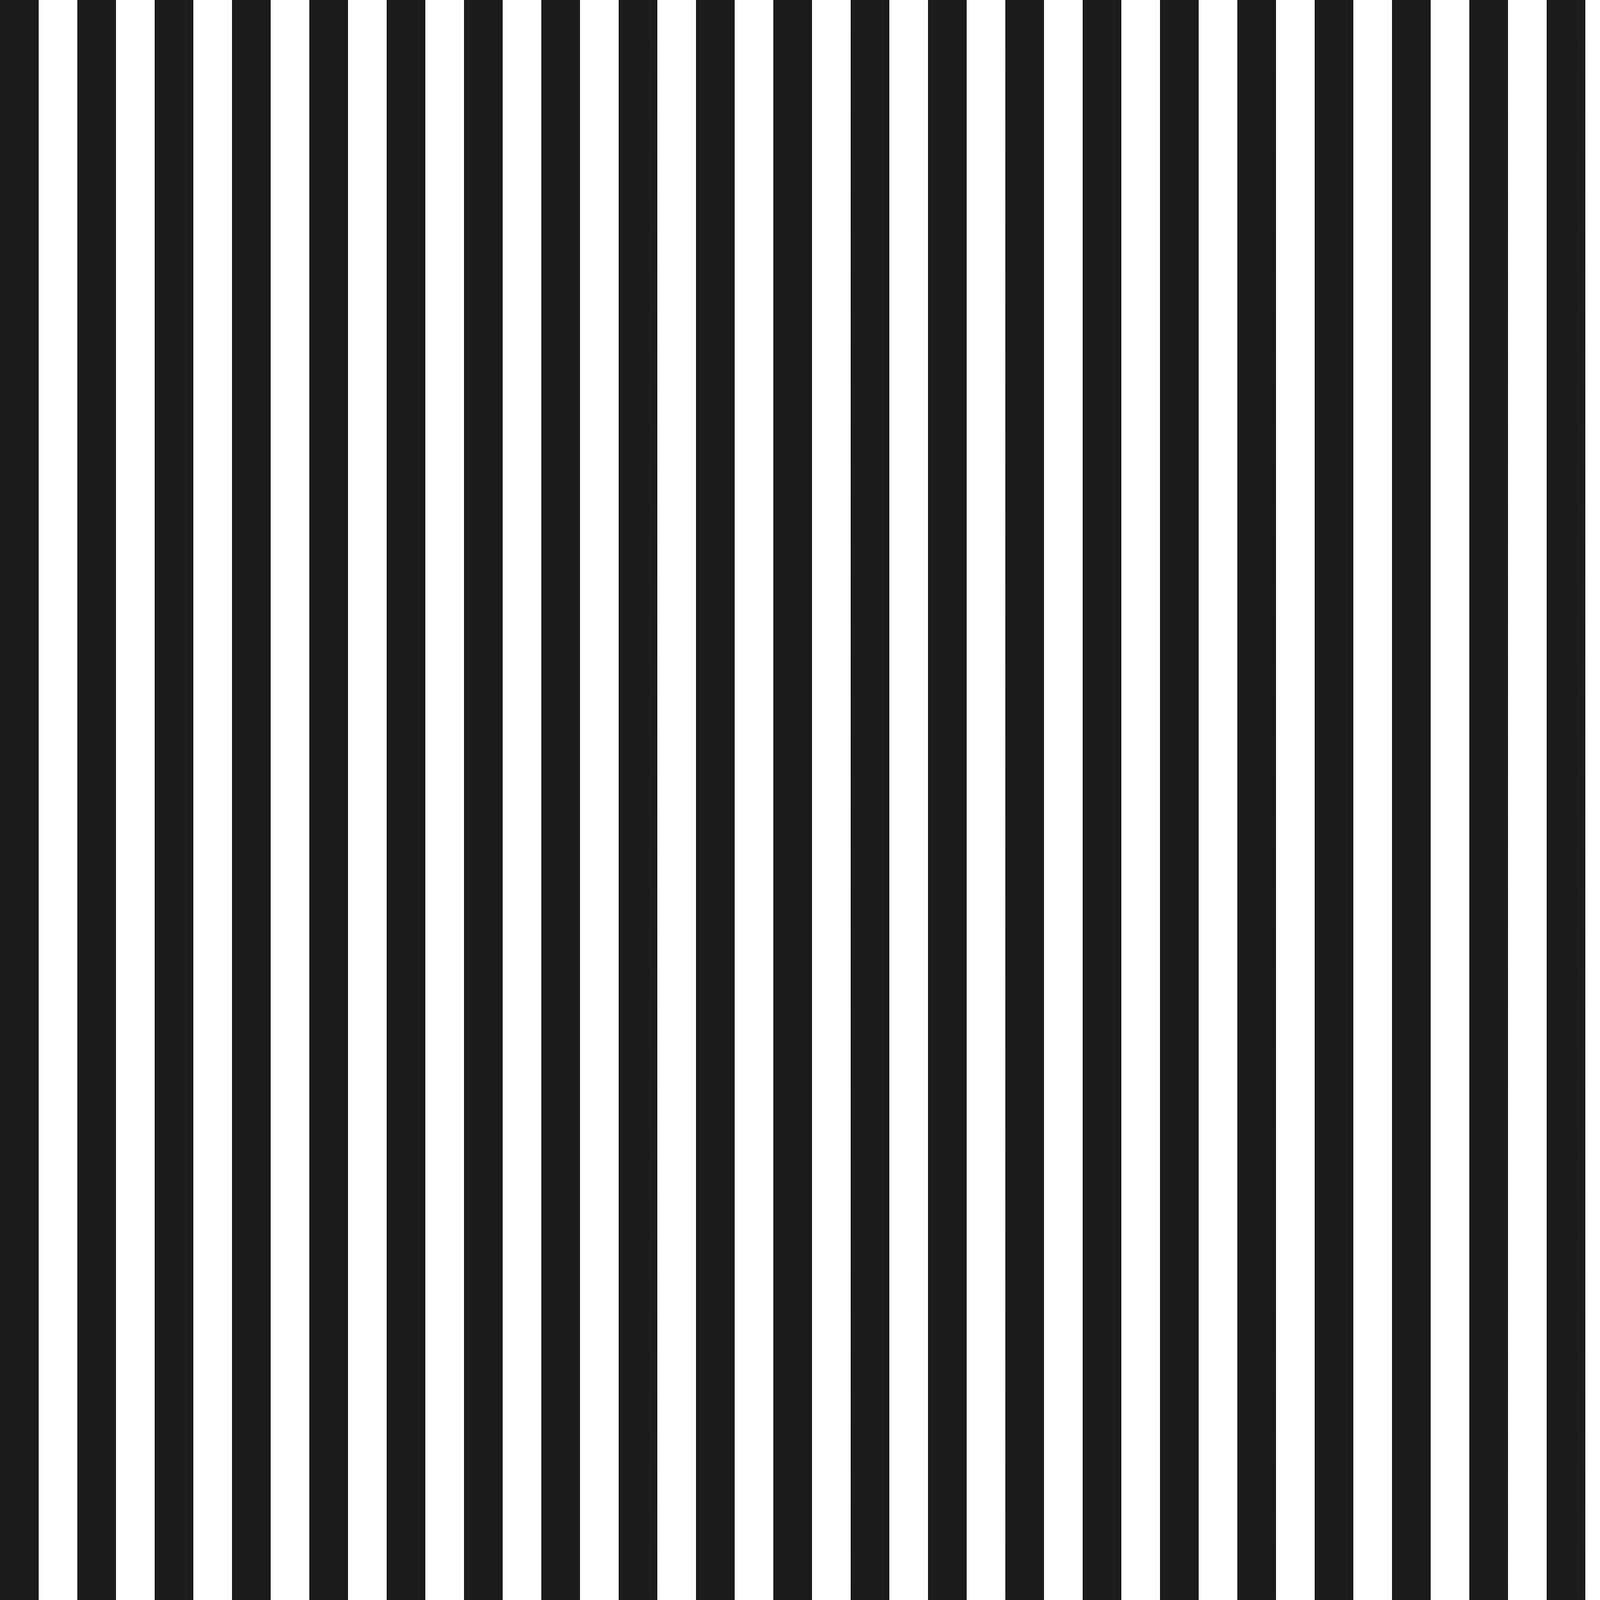 🔥 [49+] Black and White Stripe Wallpaper | WallpaperSafari